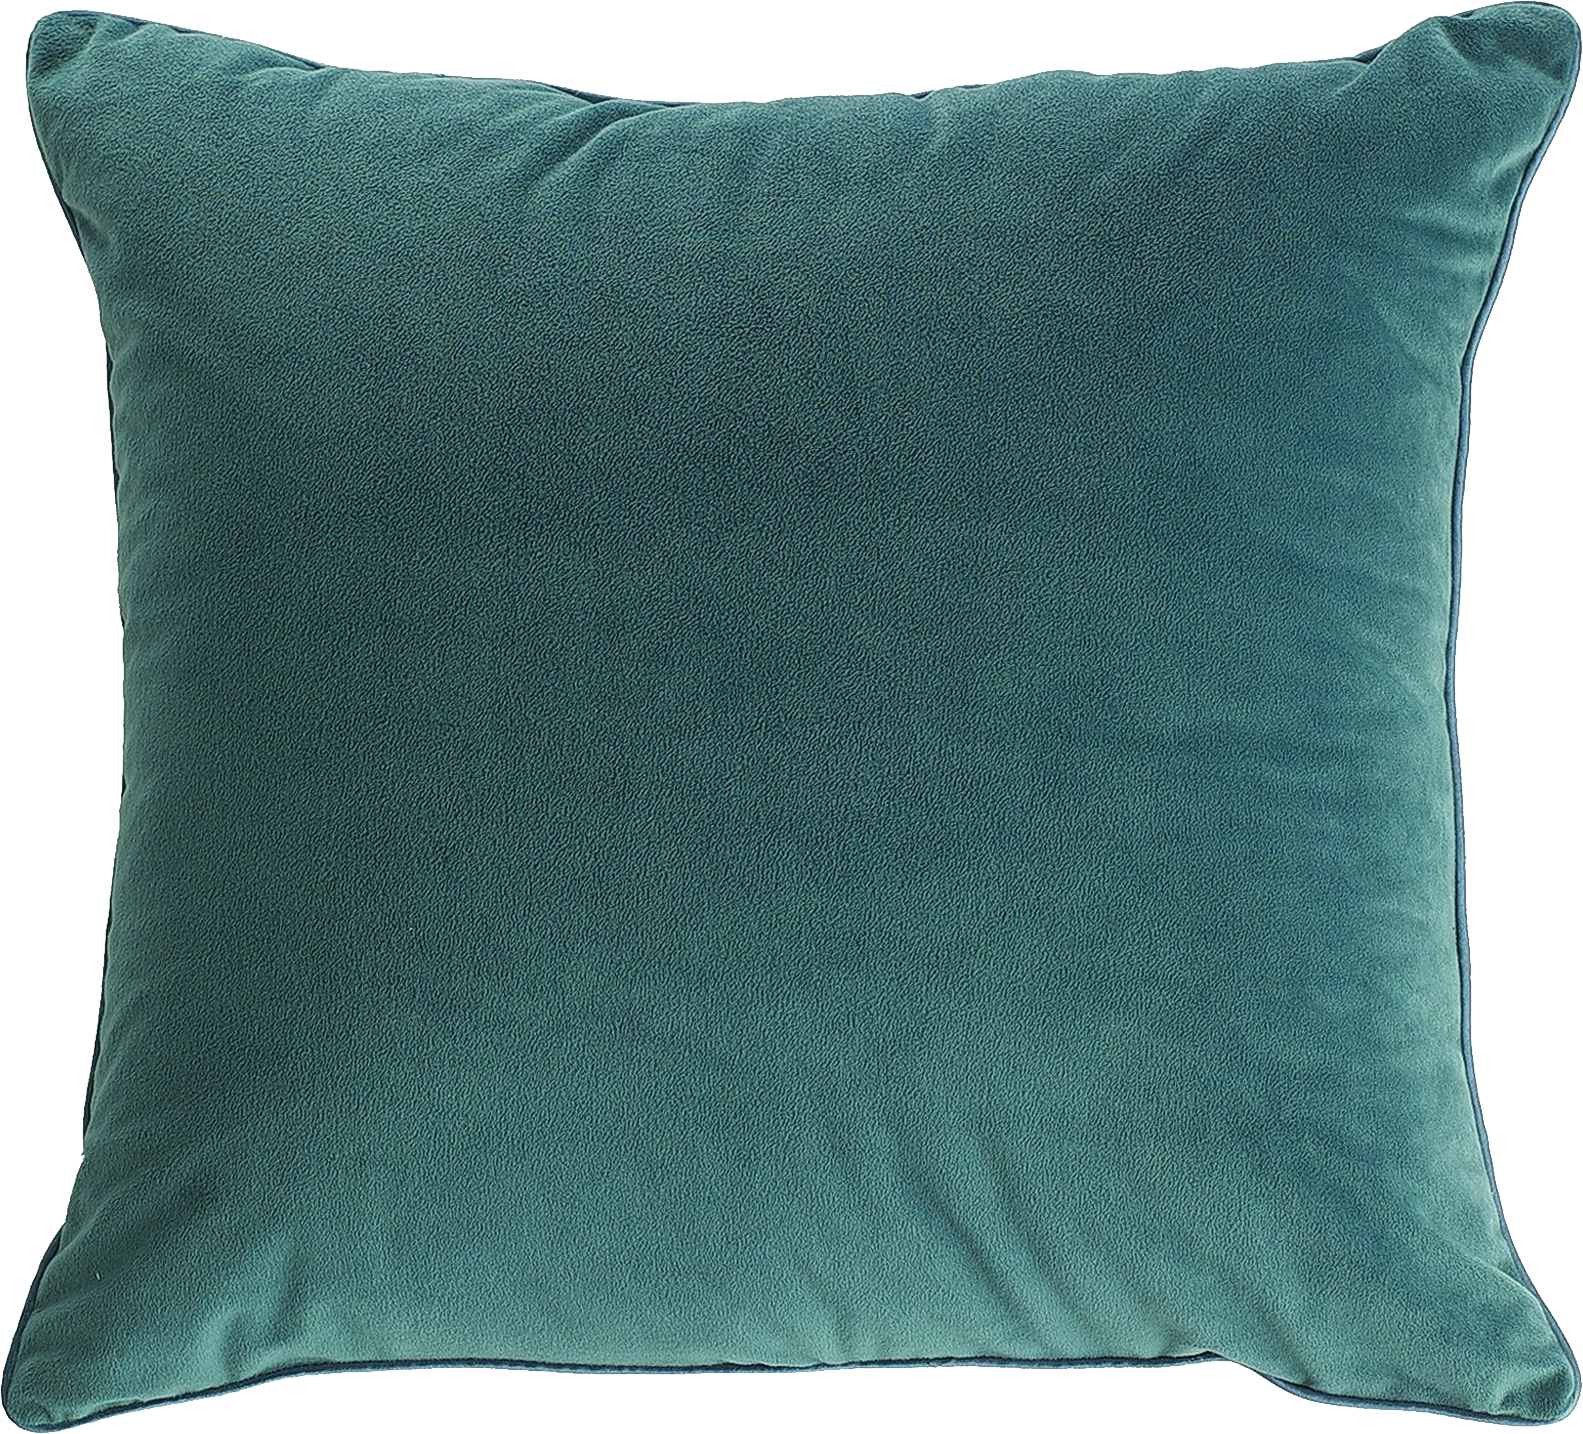 Sofa Cushion PNG Transparent Image